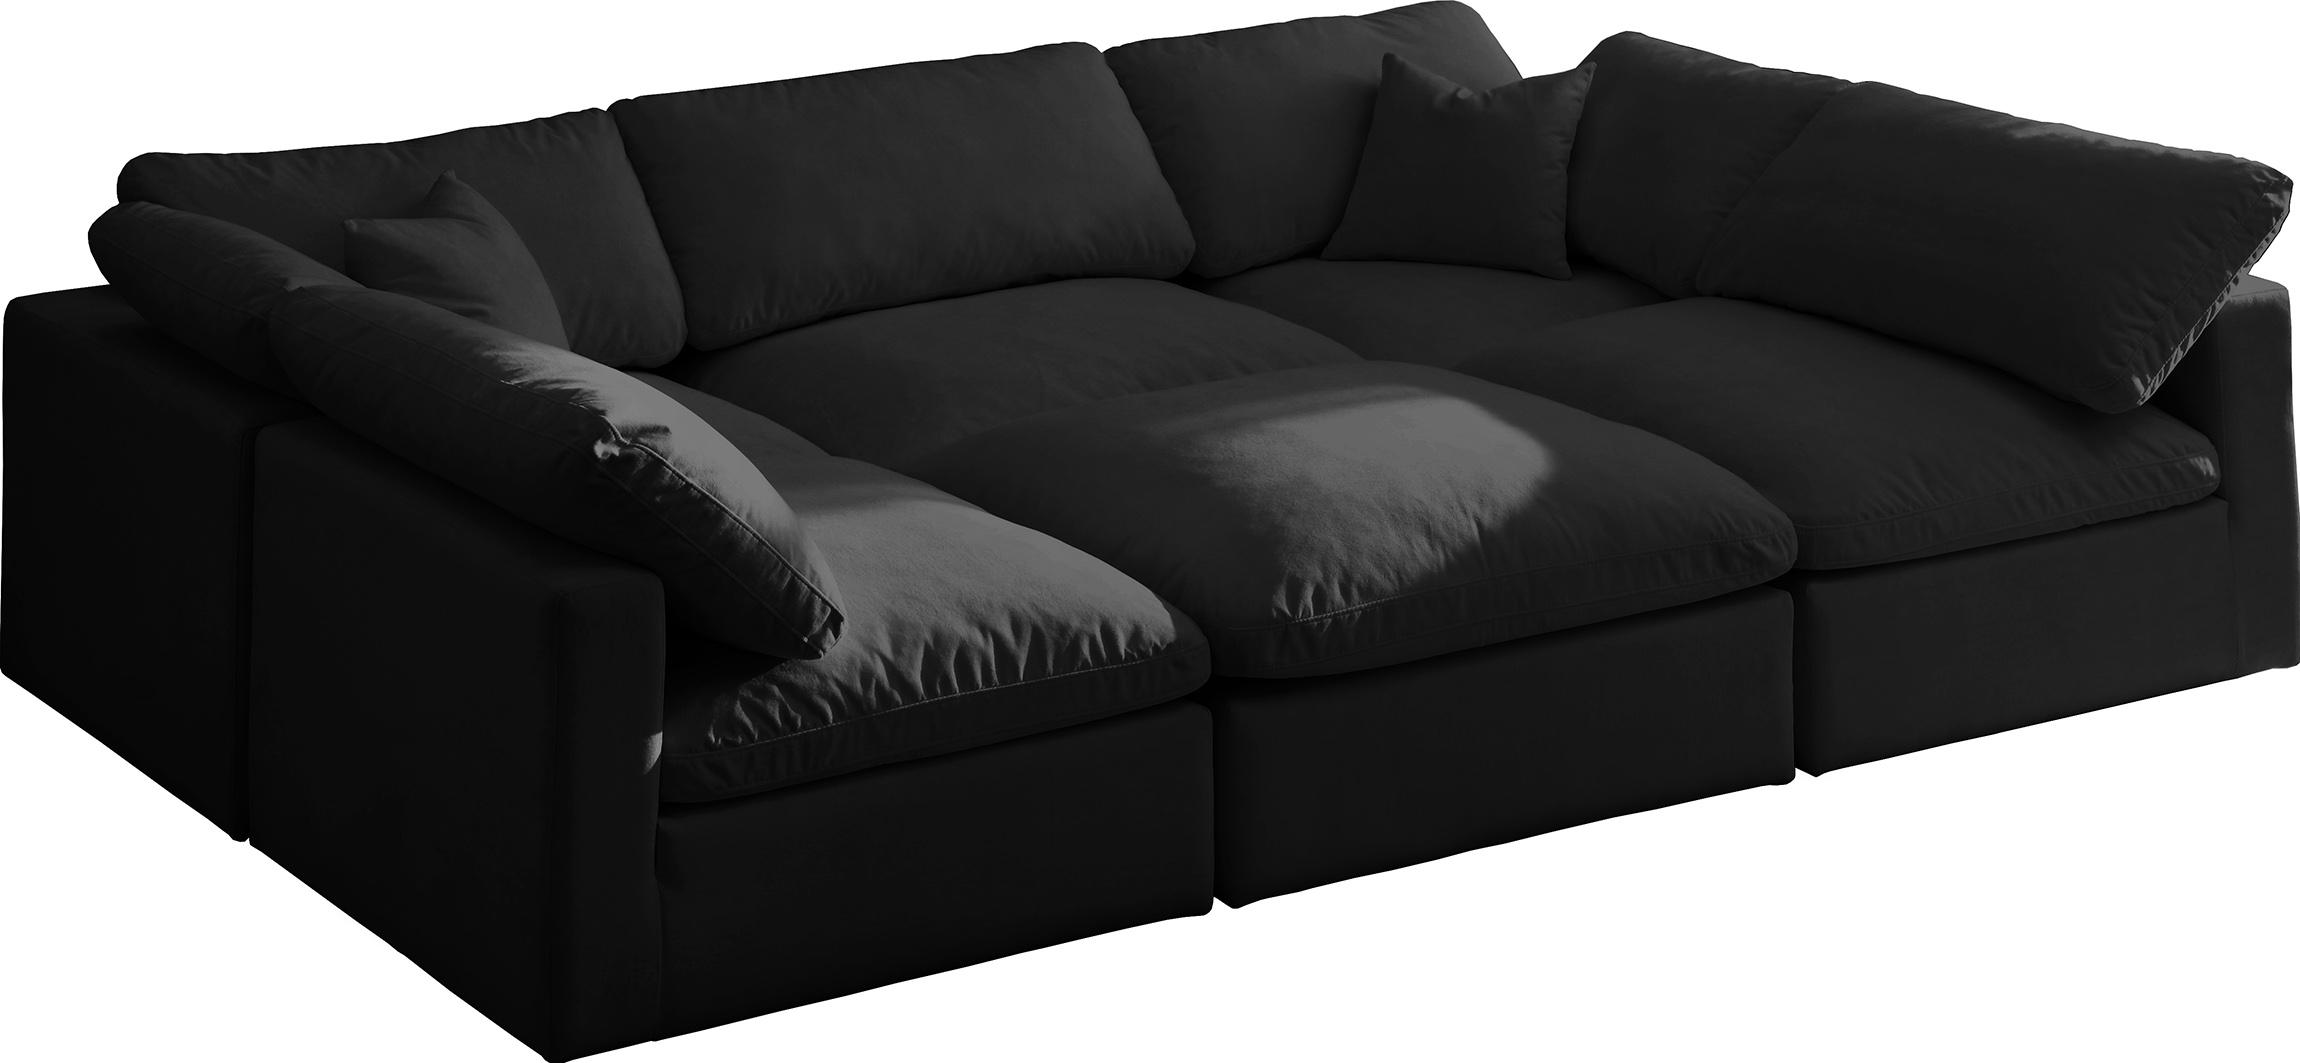 Contemporary, Modern Modular Sectional Sofa 602Black-Sec6C 602Black-Sec6C in Black Fabric